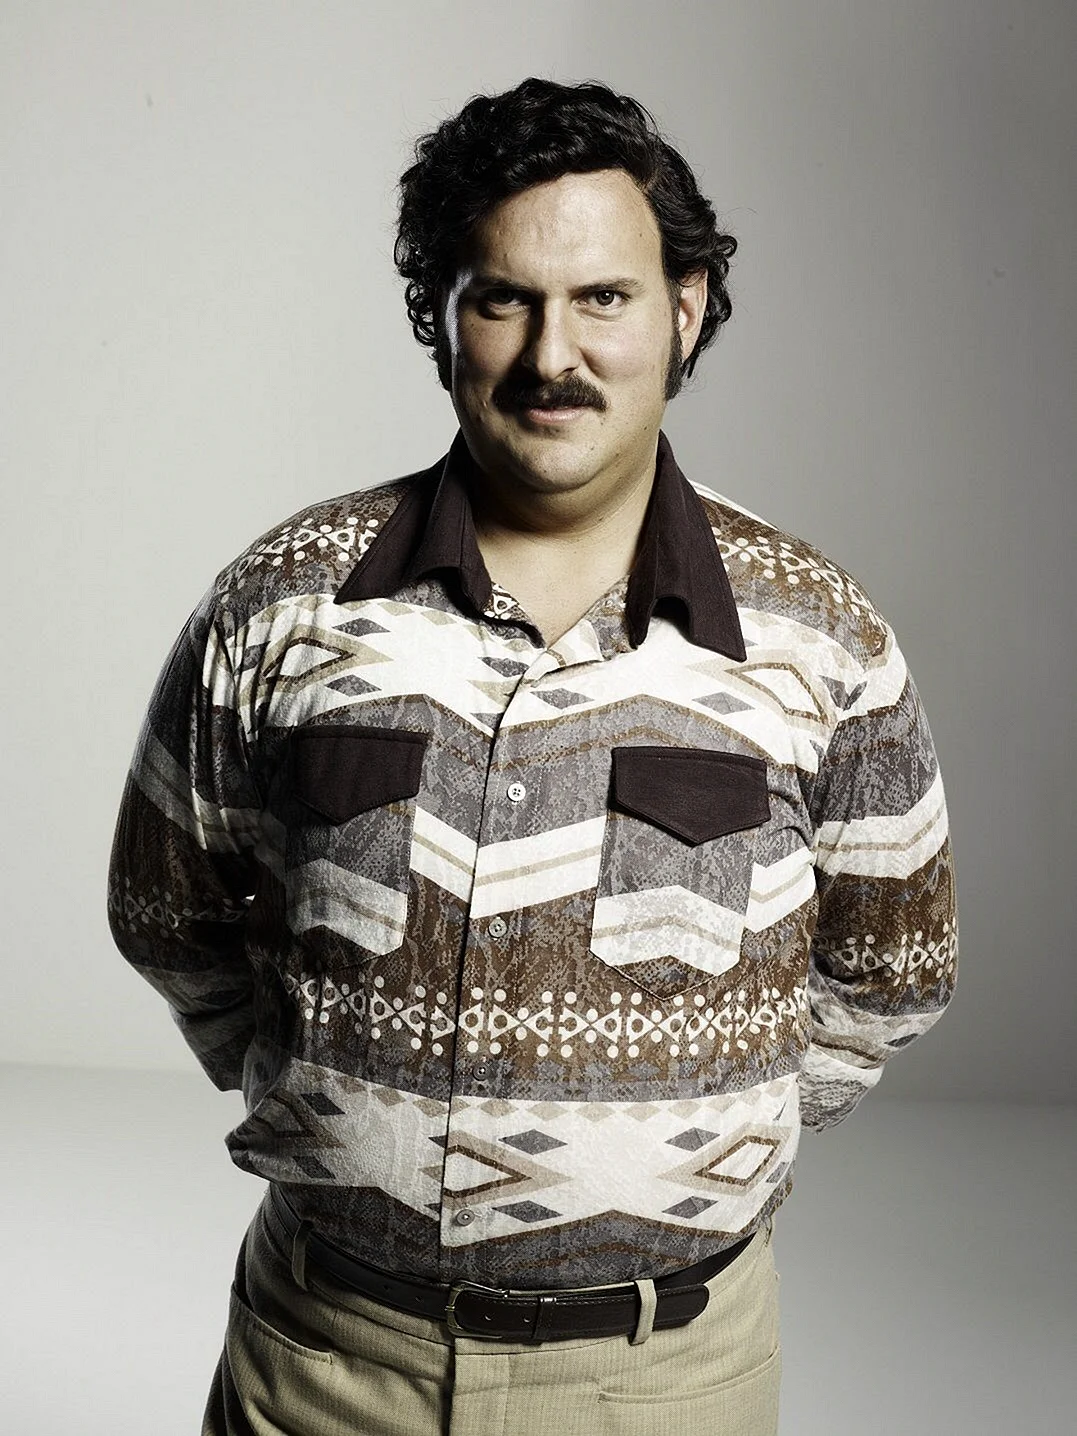 Pablo Escobar Wallpaper For iPhone